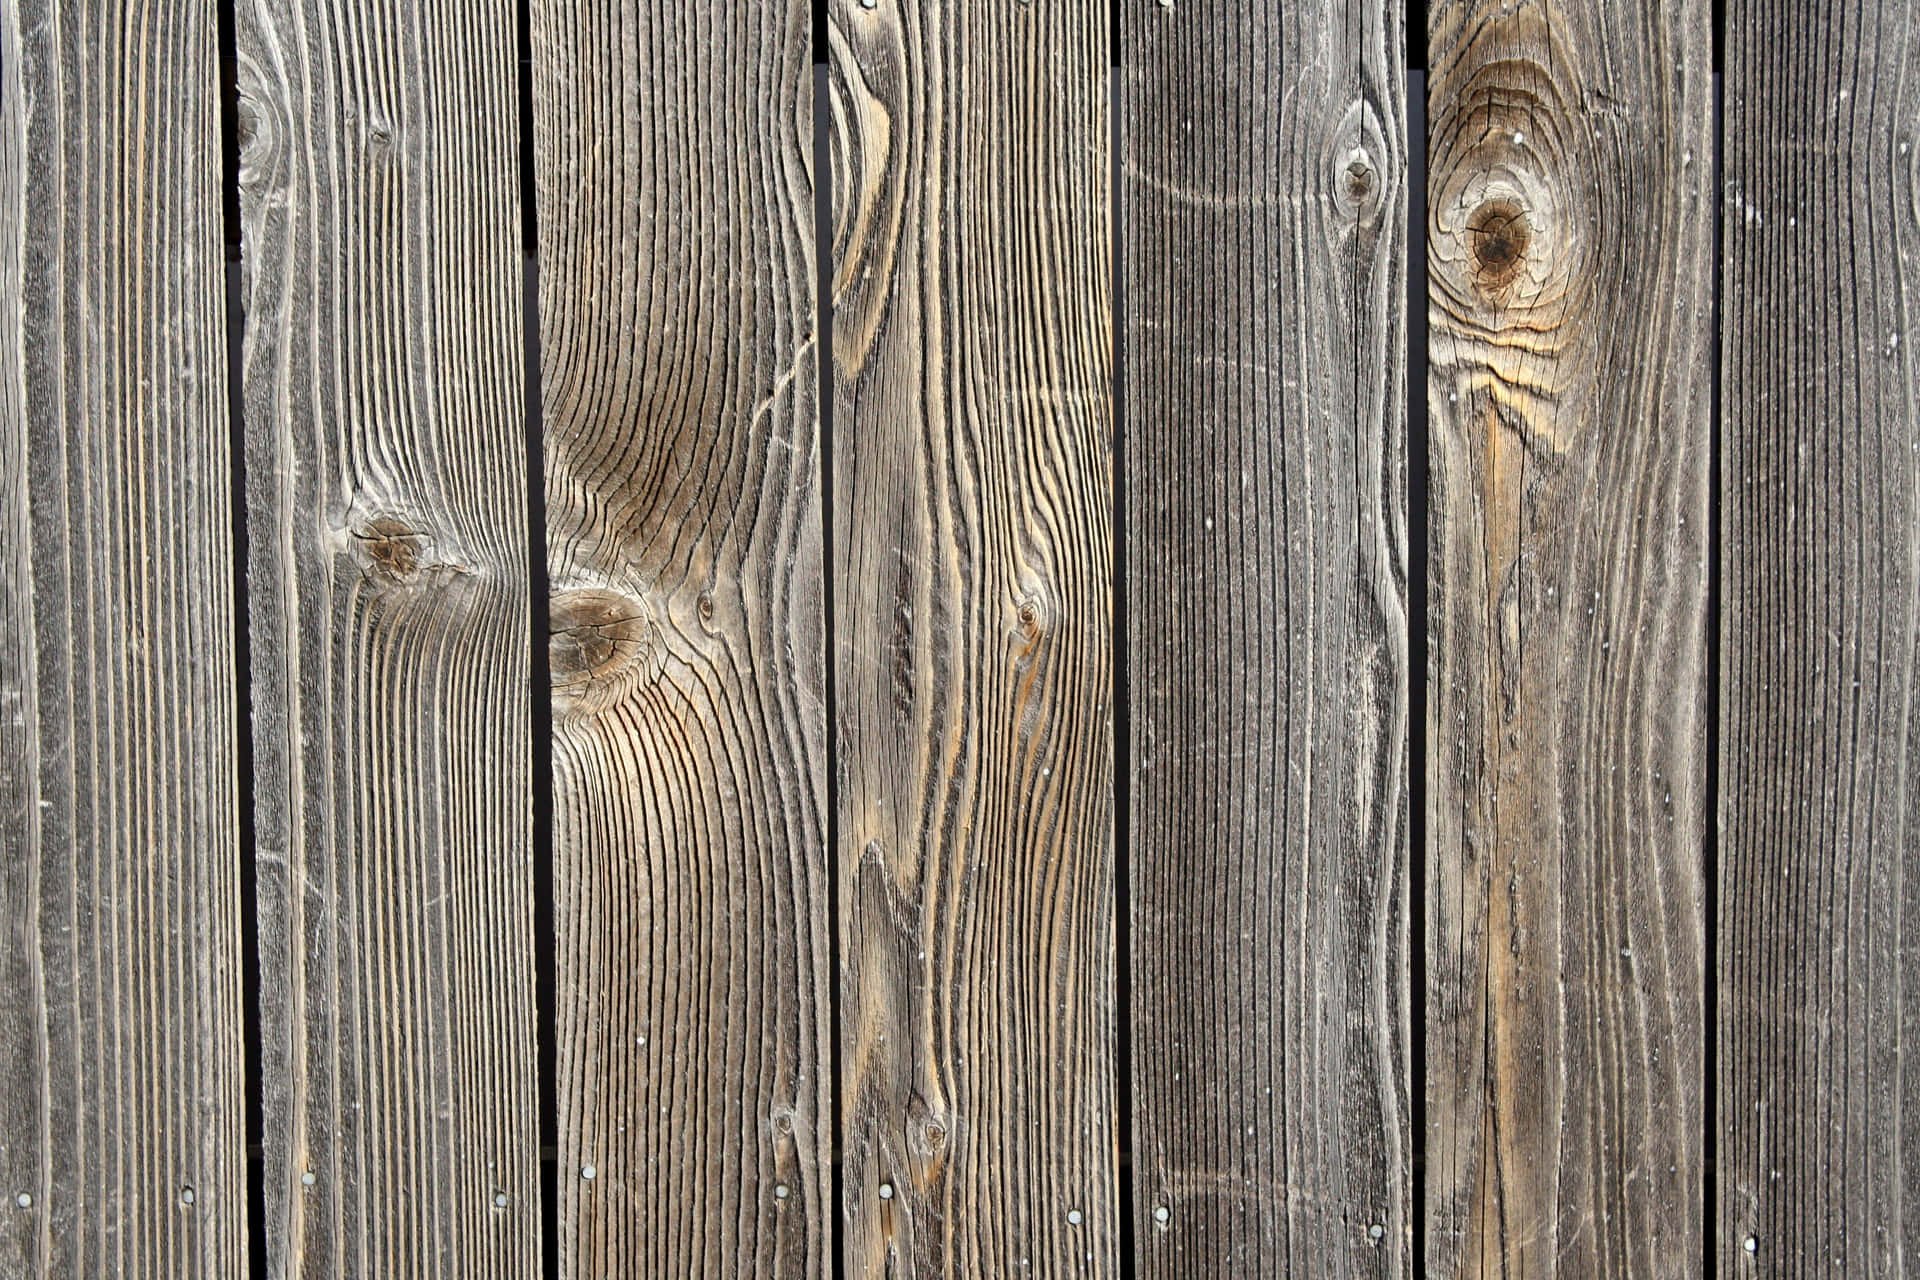 A Wooden Fence Wallpaper